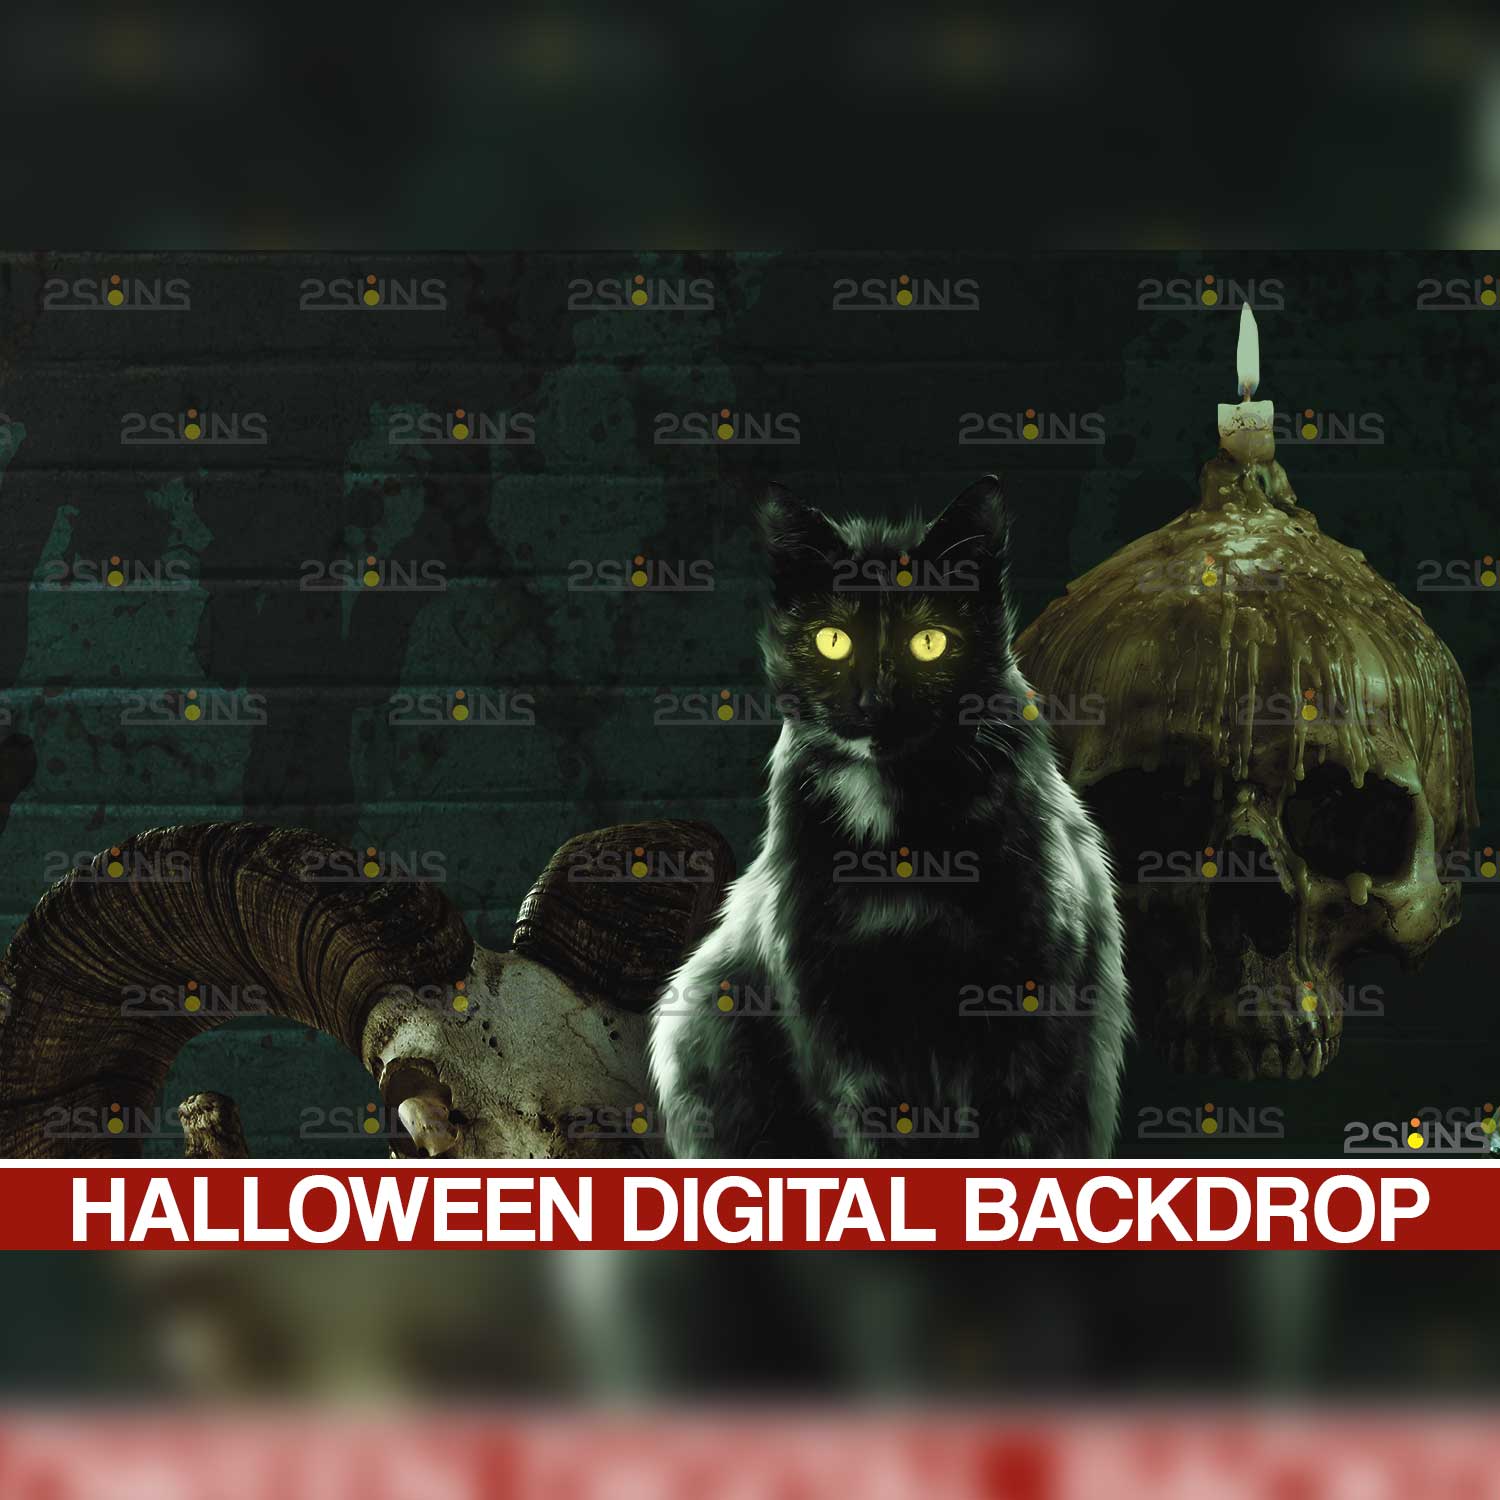 Halloween Ghost Overlay Backdrop Black Cat.